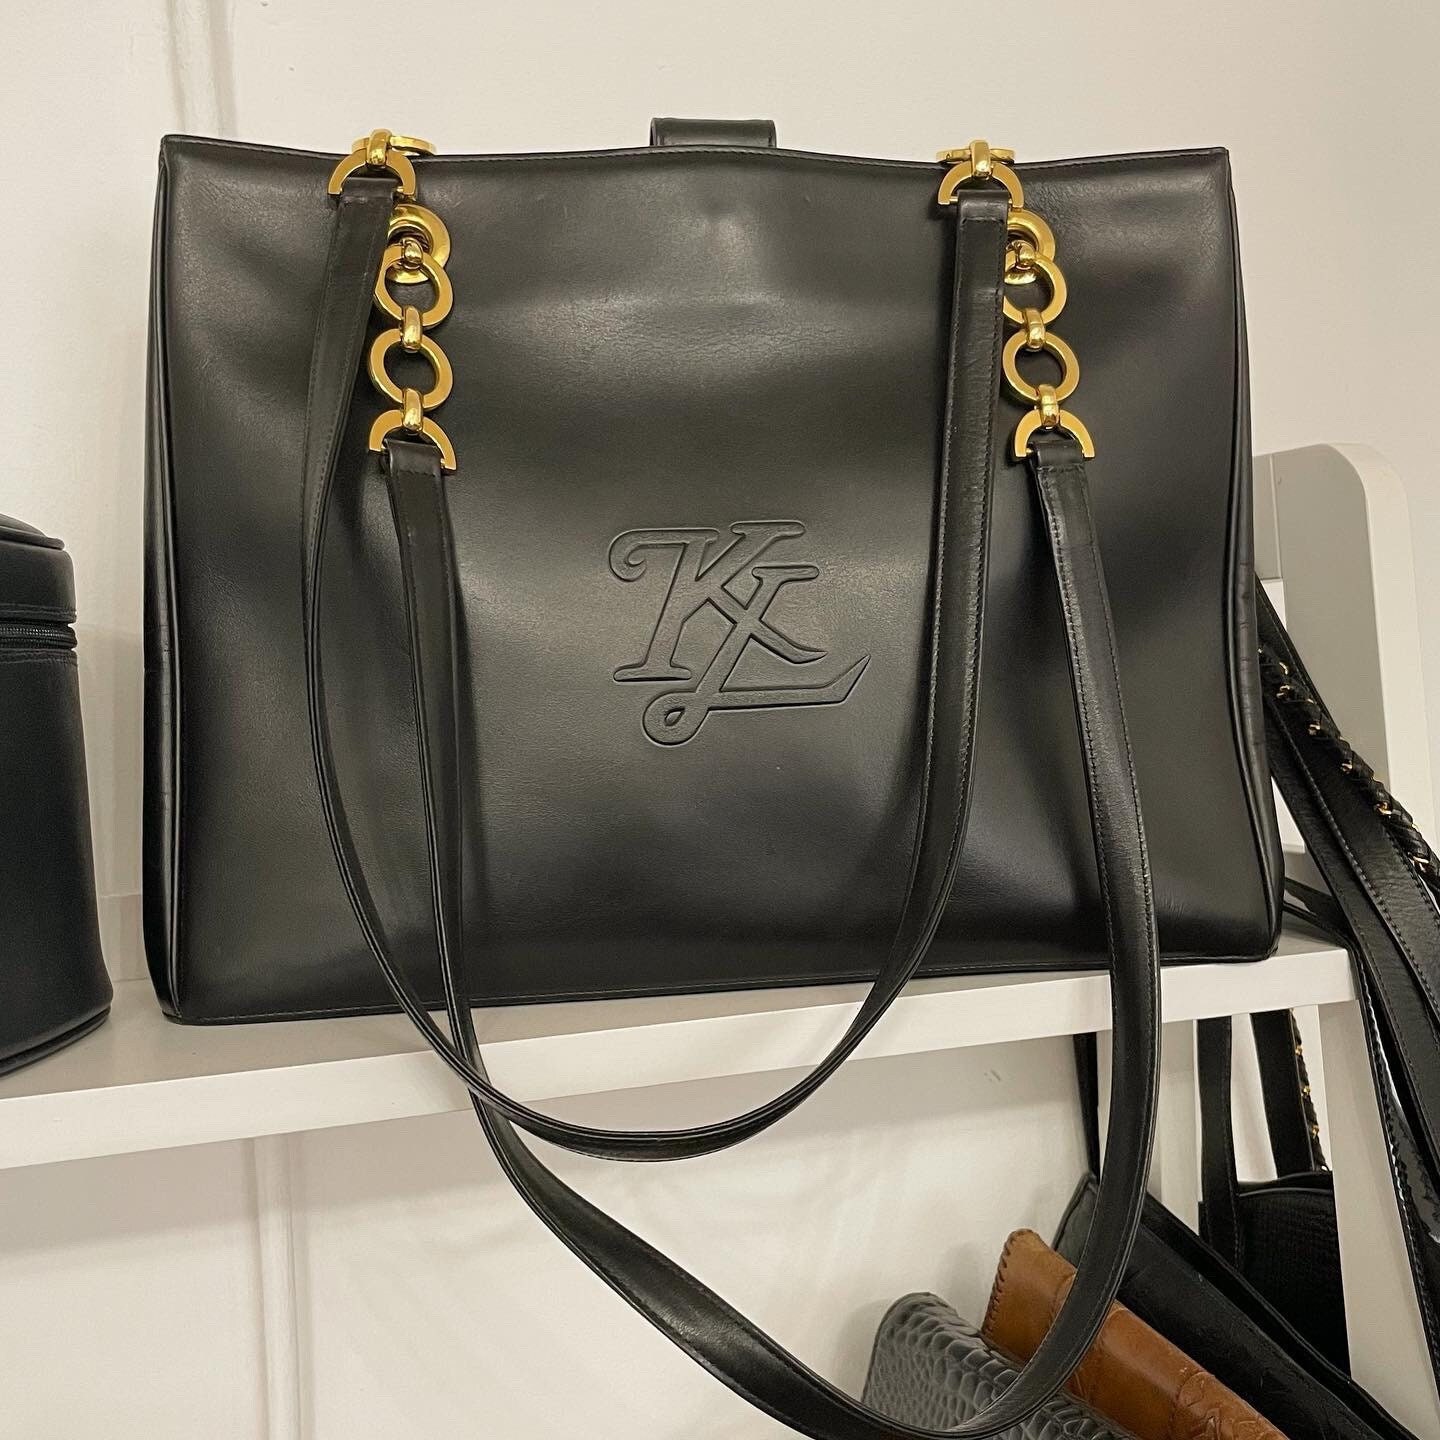 KARL LAGERFELD K/DISK CLUTCH METALLIC, Silver Women's Handbag